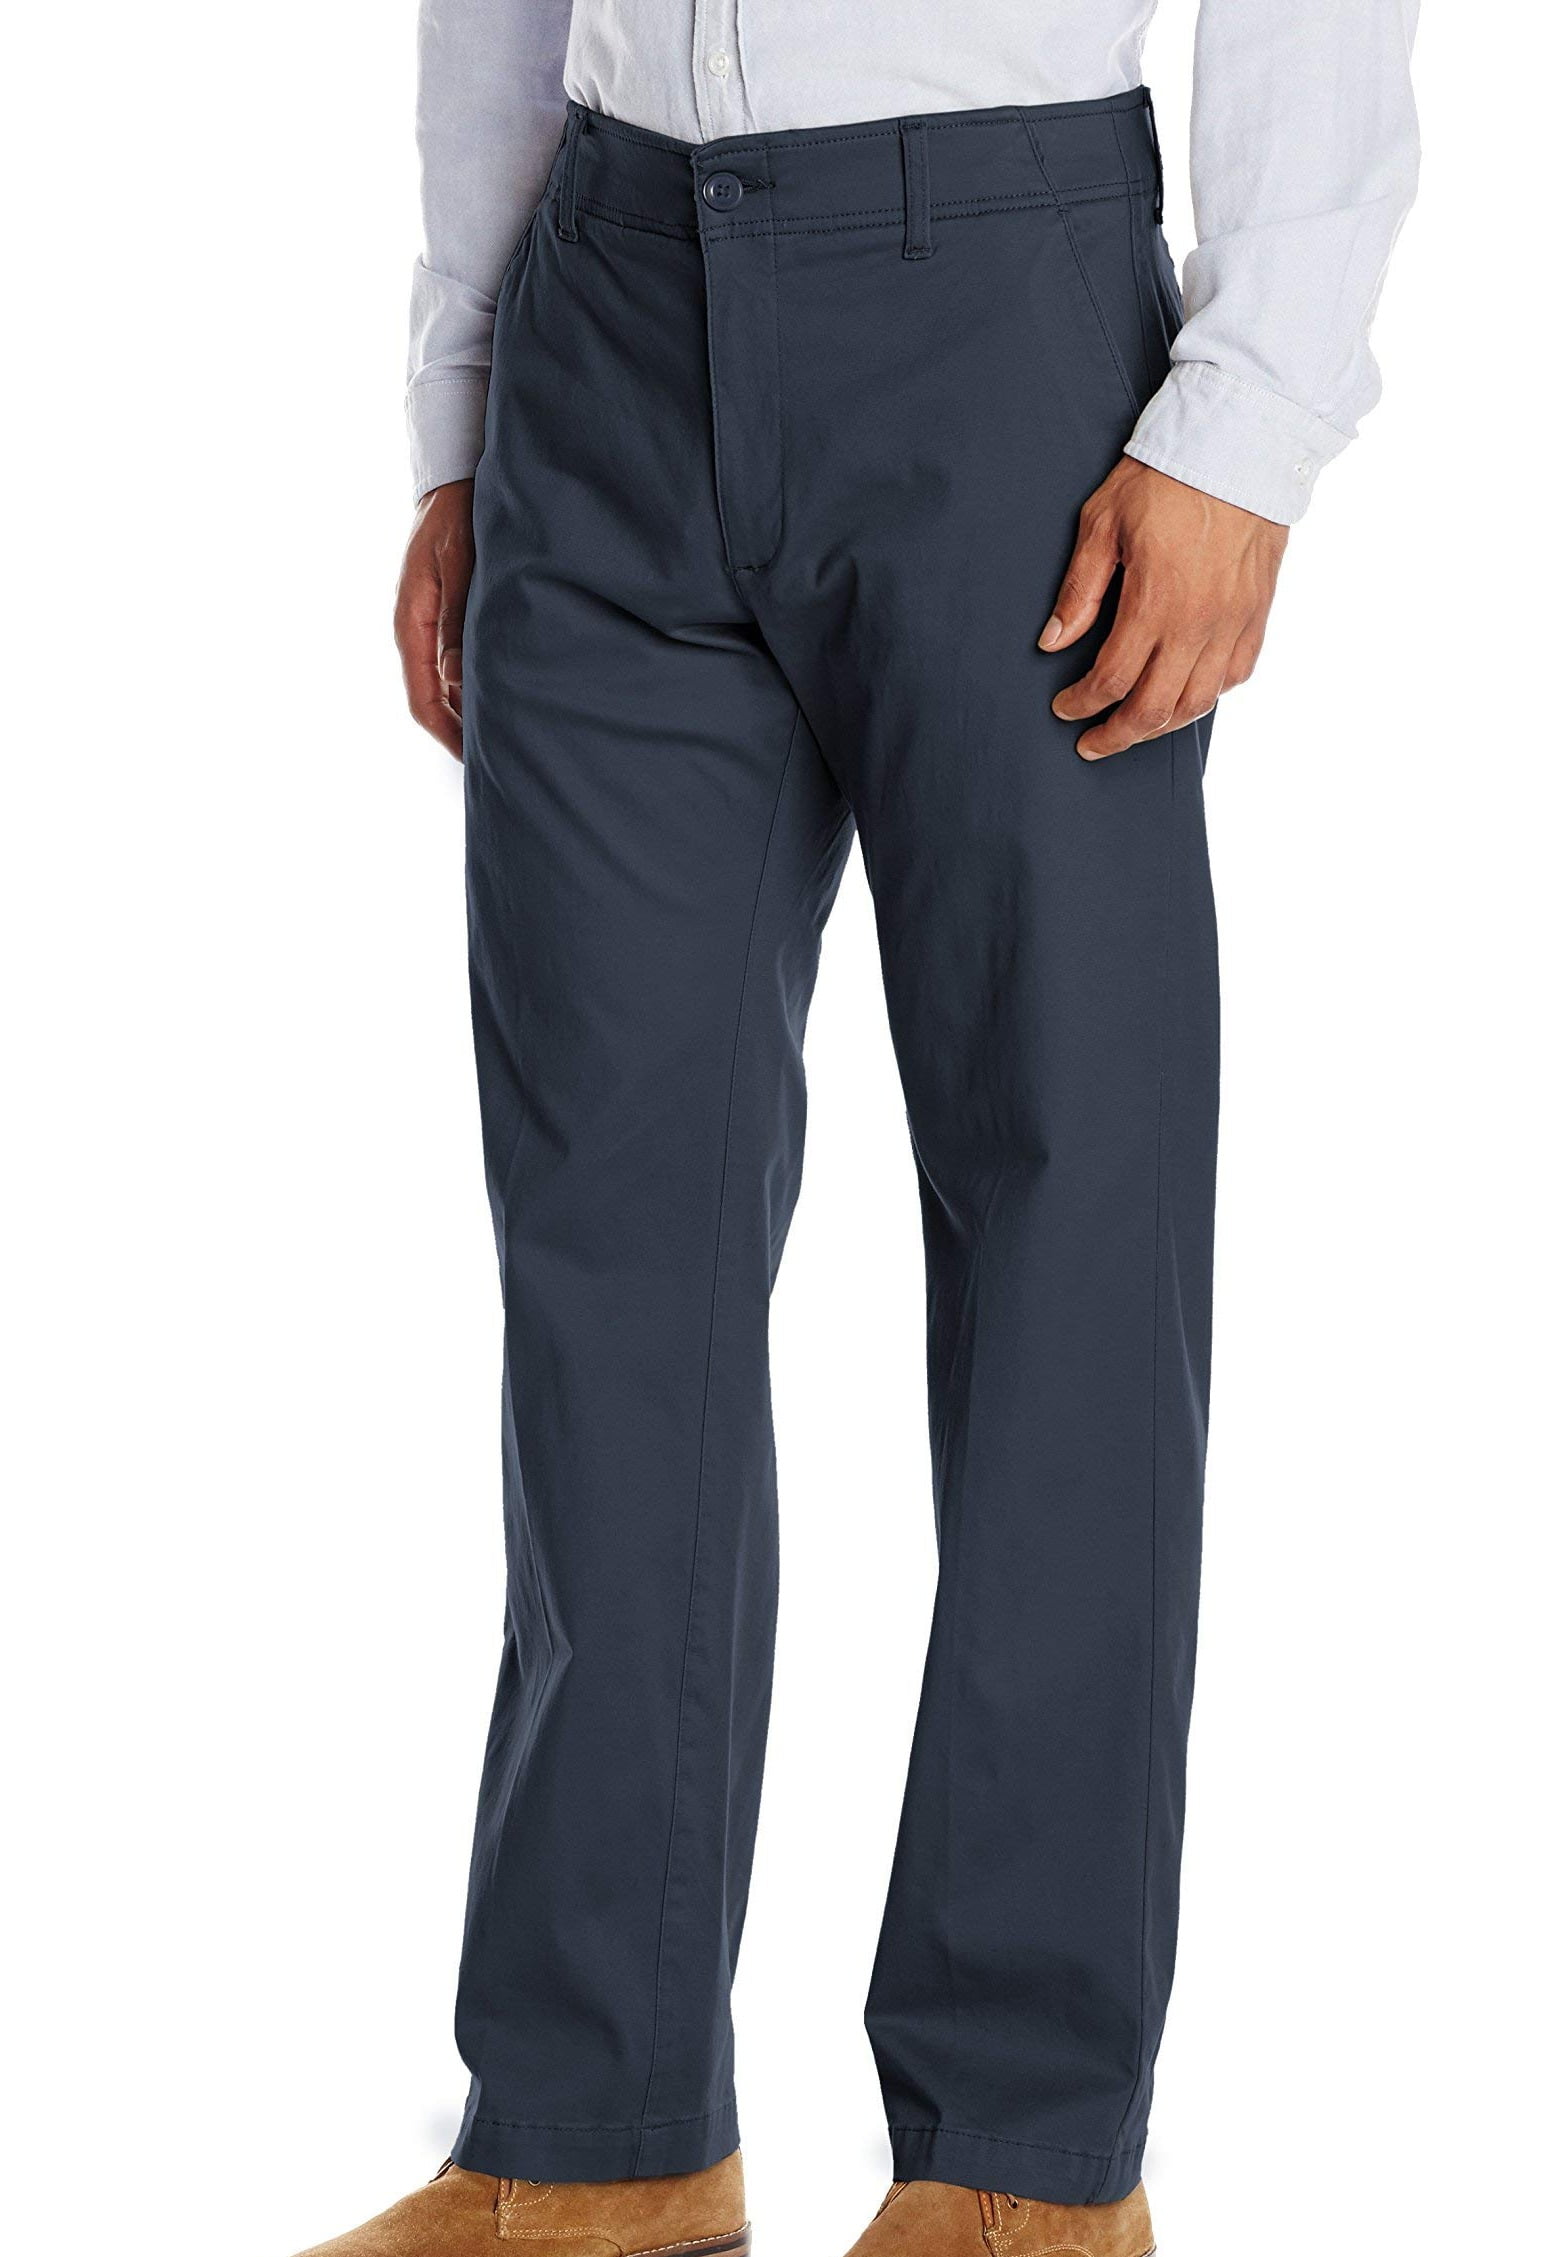 Lee - Men'[s Pants Navy 52x30 Comfort-Fit Khakis Stretch 52 - Walmart ...